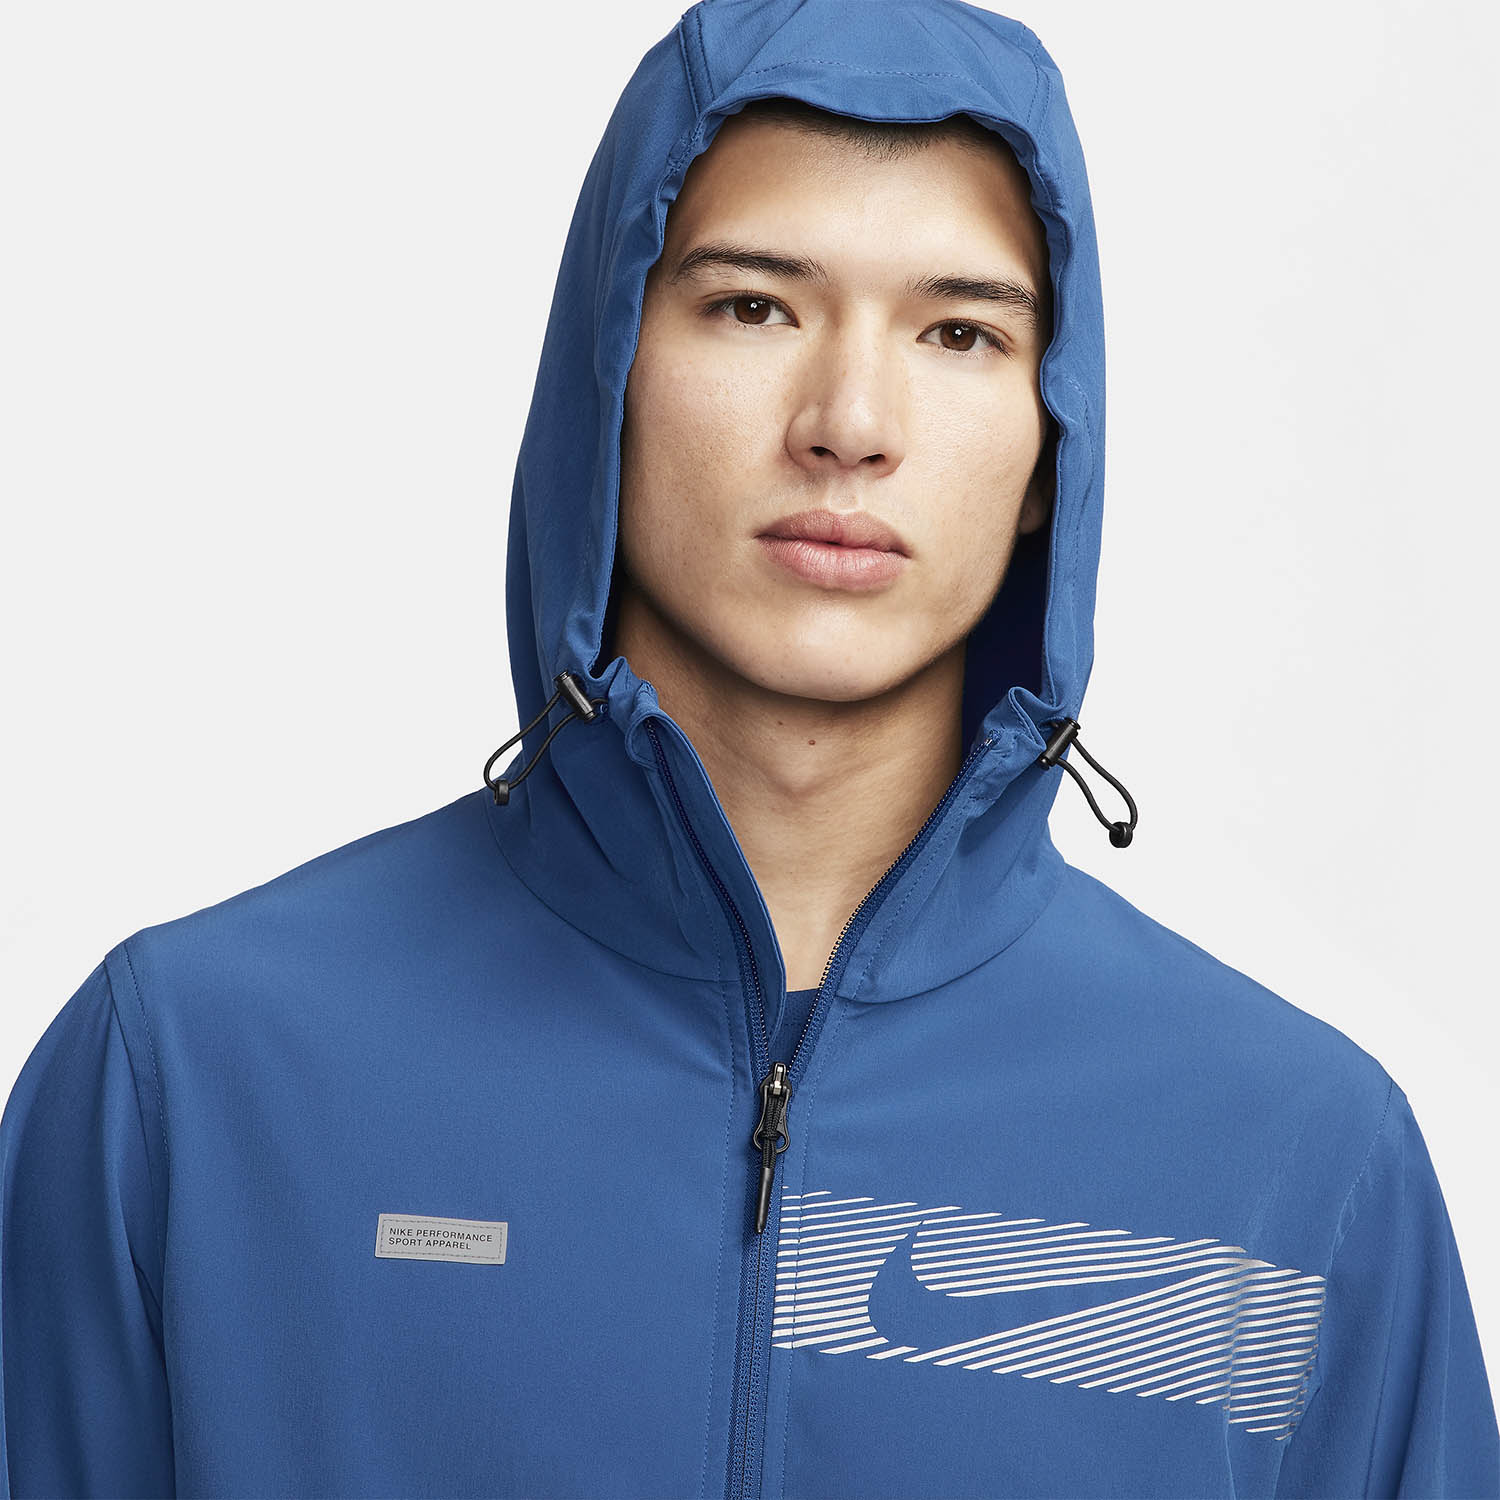 Nike Unlimited Flash Jacket - Court Blue/Reflective Silver